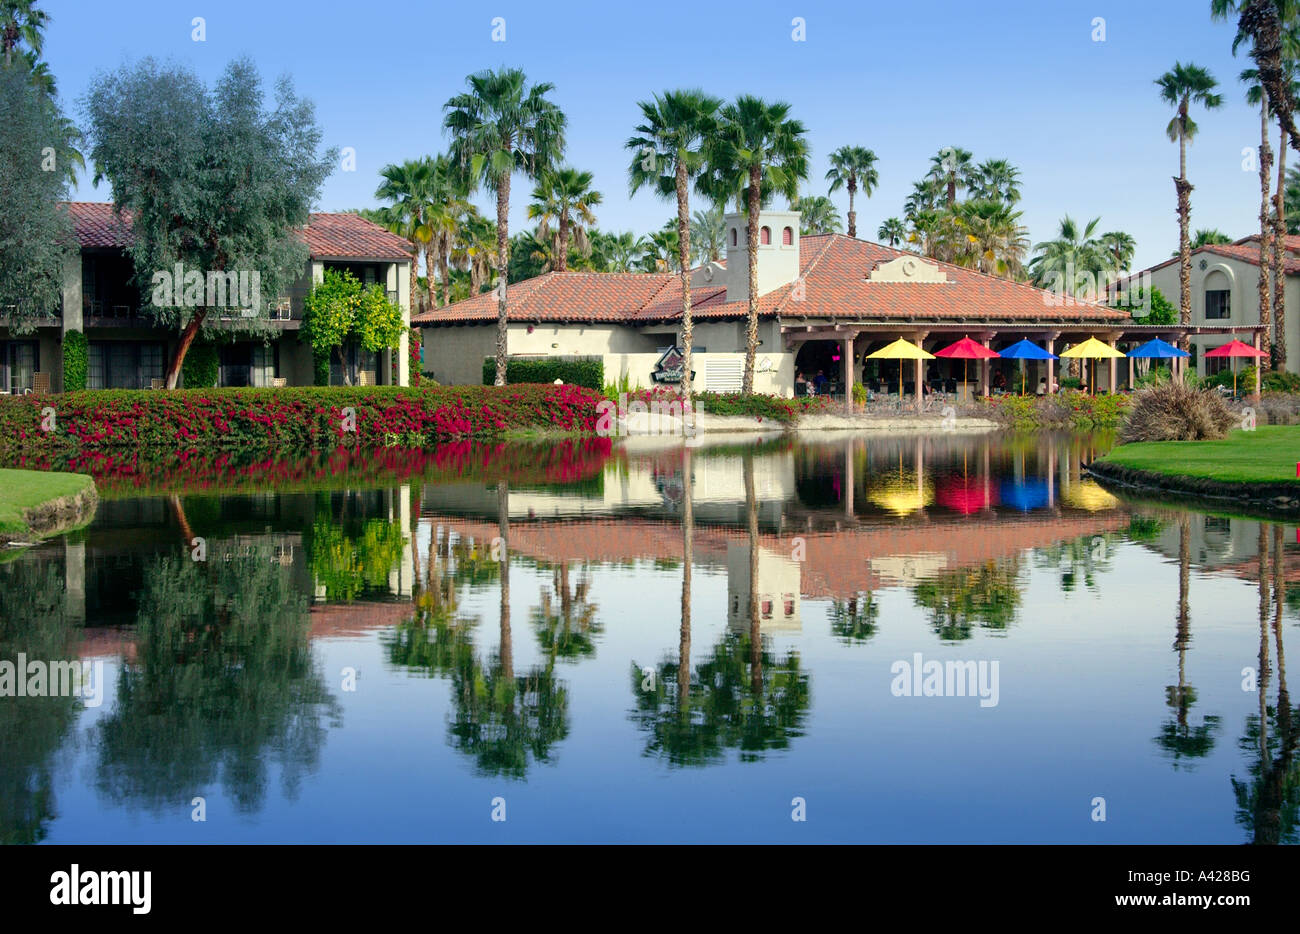 Rancho las palmas resort hi-res stock photography and images - Alamy